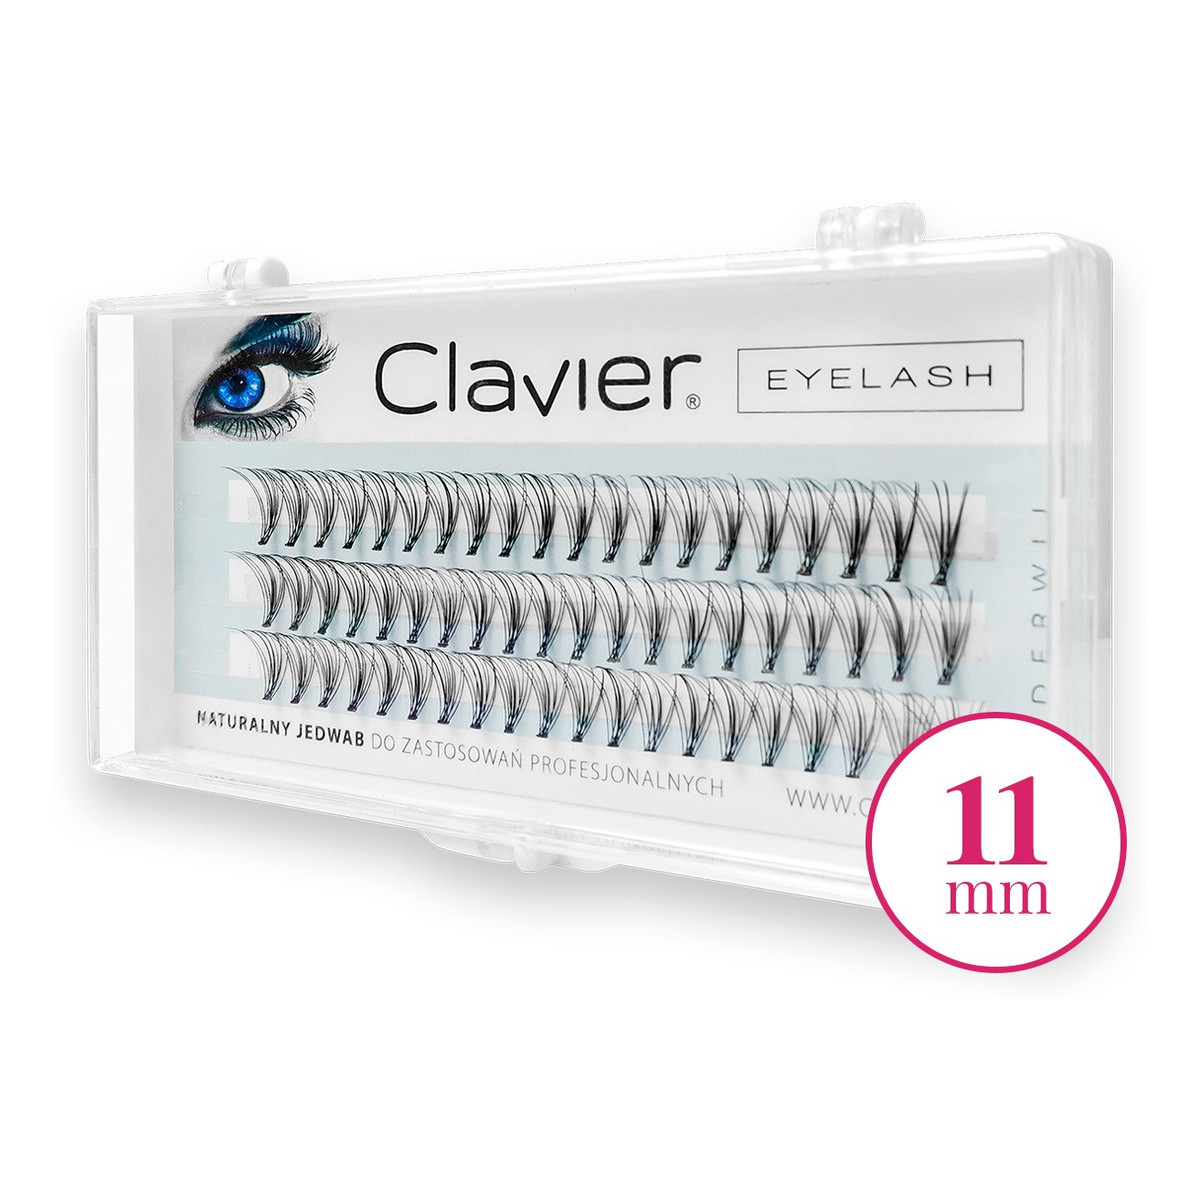 Clavier Eyelash kępki rzęs 11mm